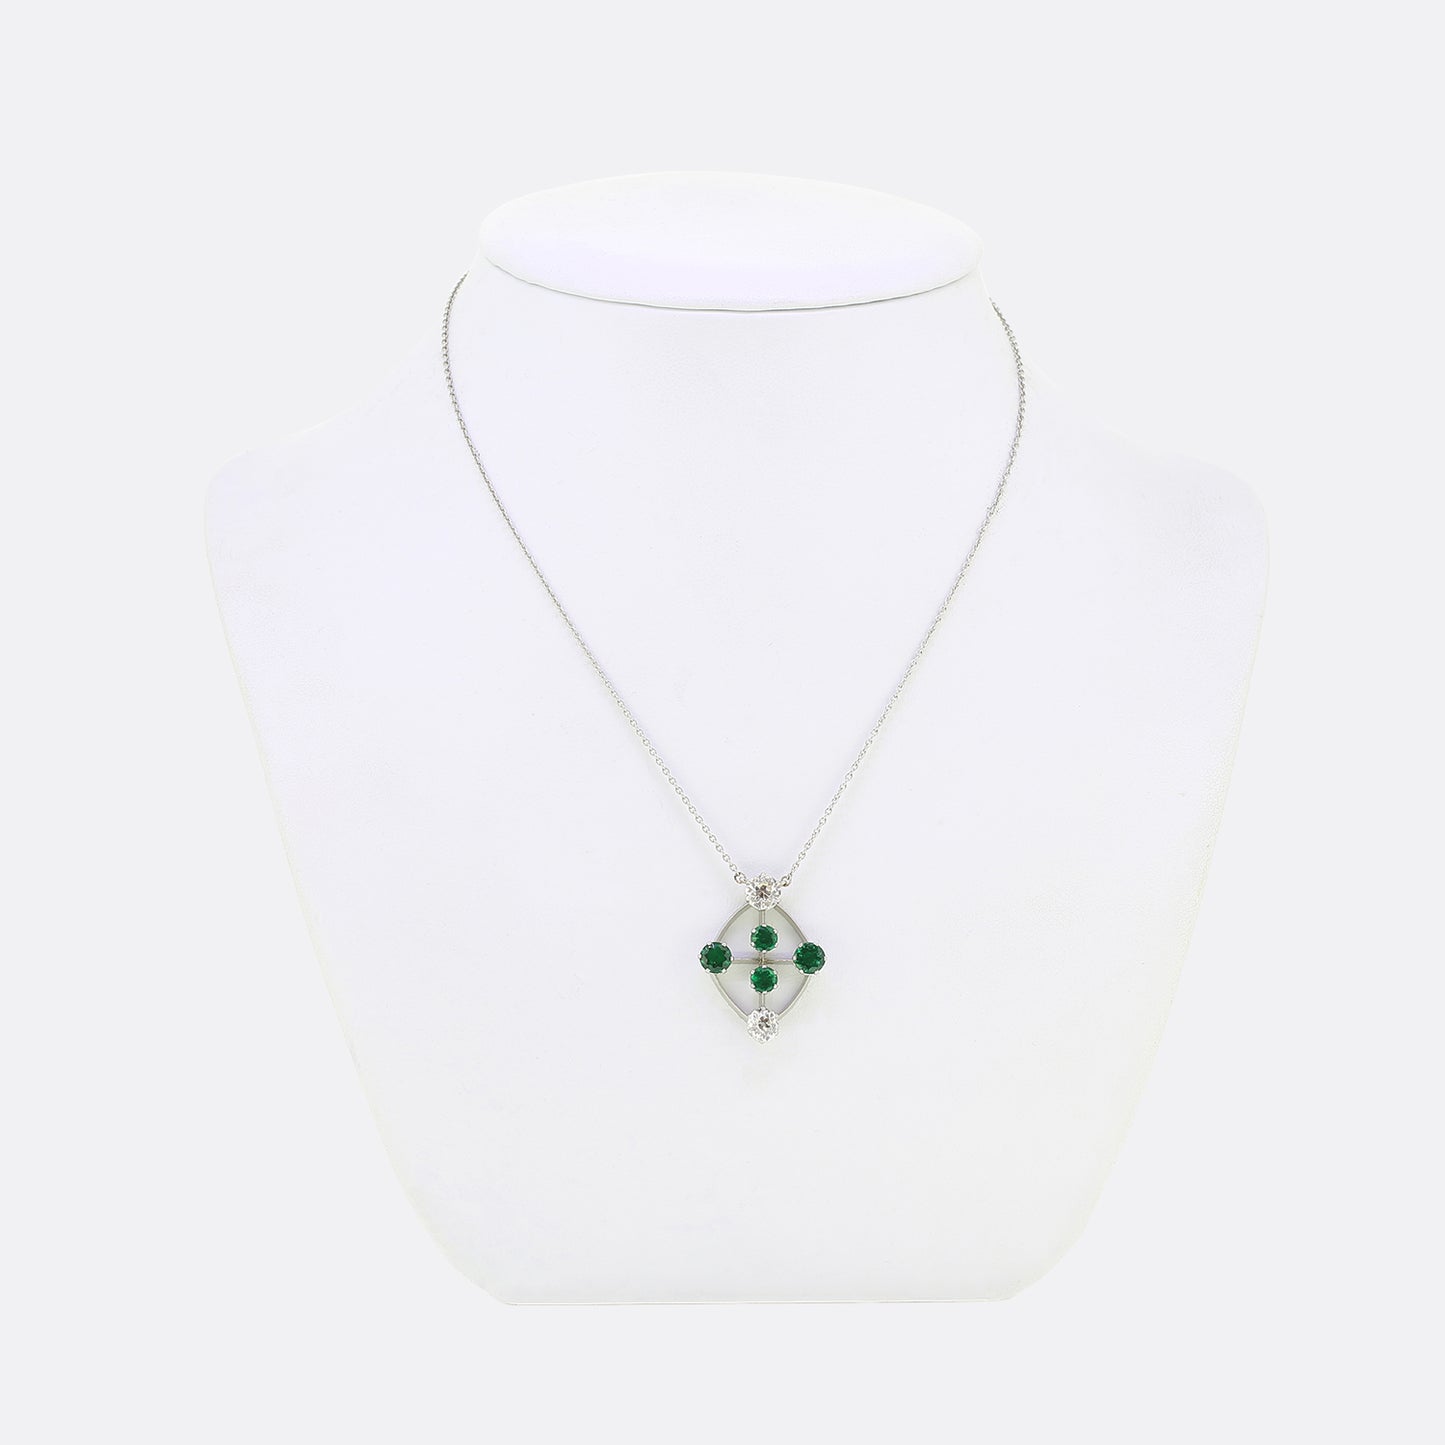 Edwardian Emerald and Diamond Necklace